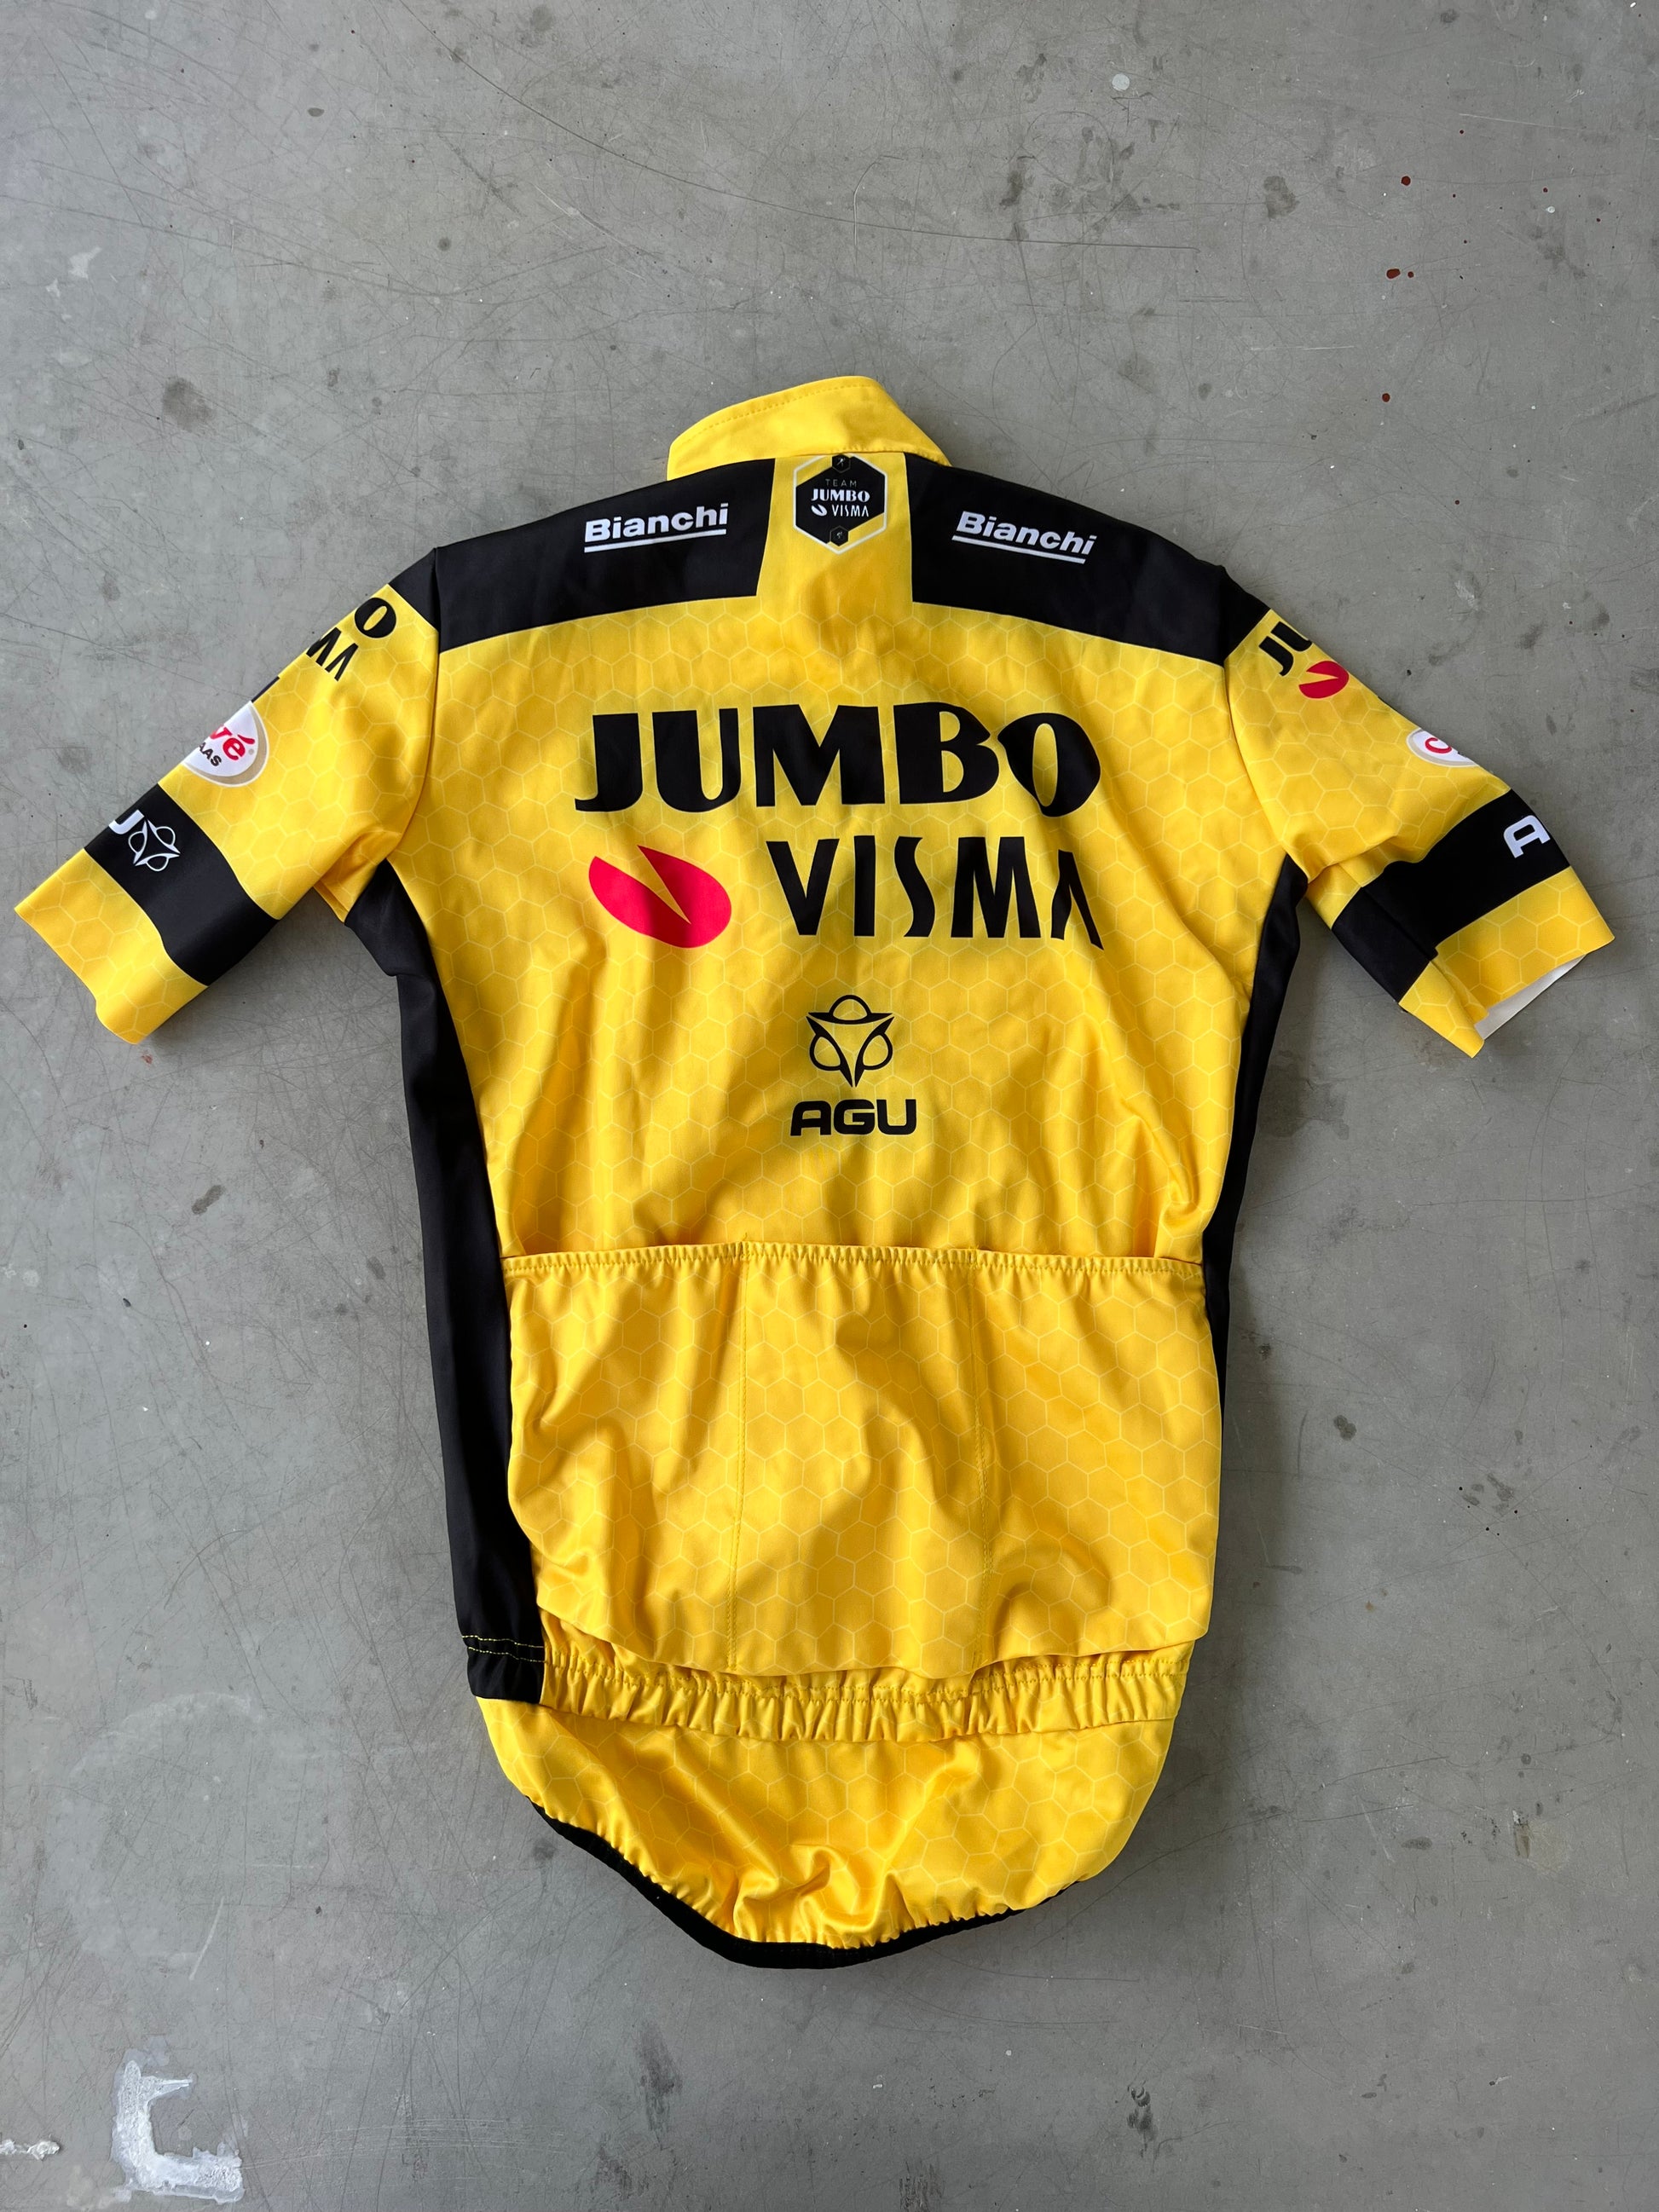 Jumbo Visma | Agu Short Sleeve Gabba Jacket / Jersey | XS | Rider-Issu ...